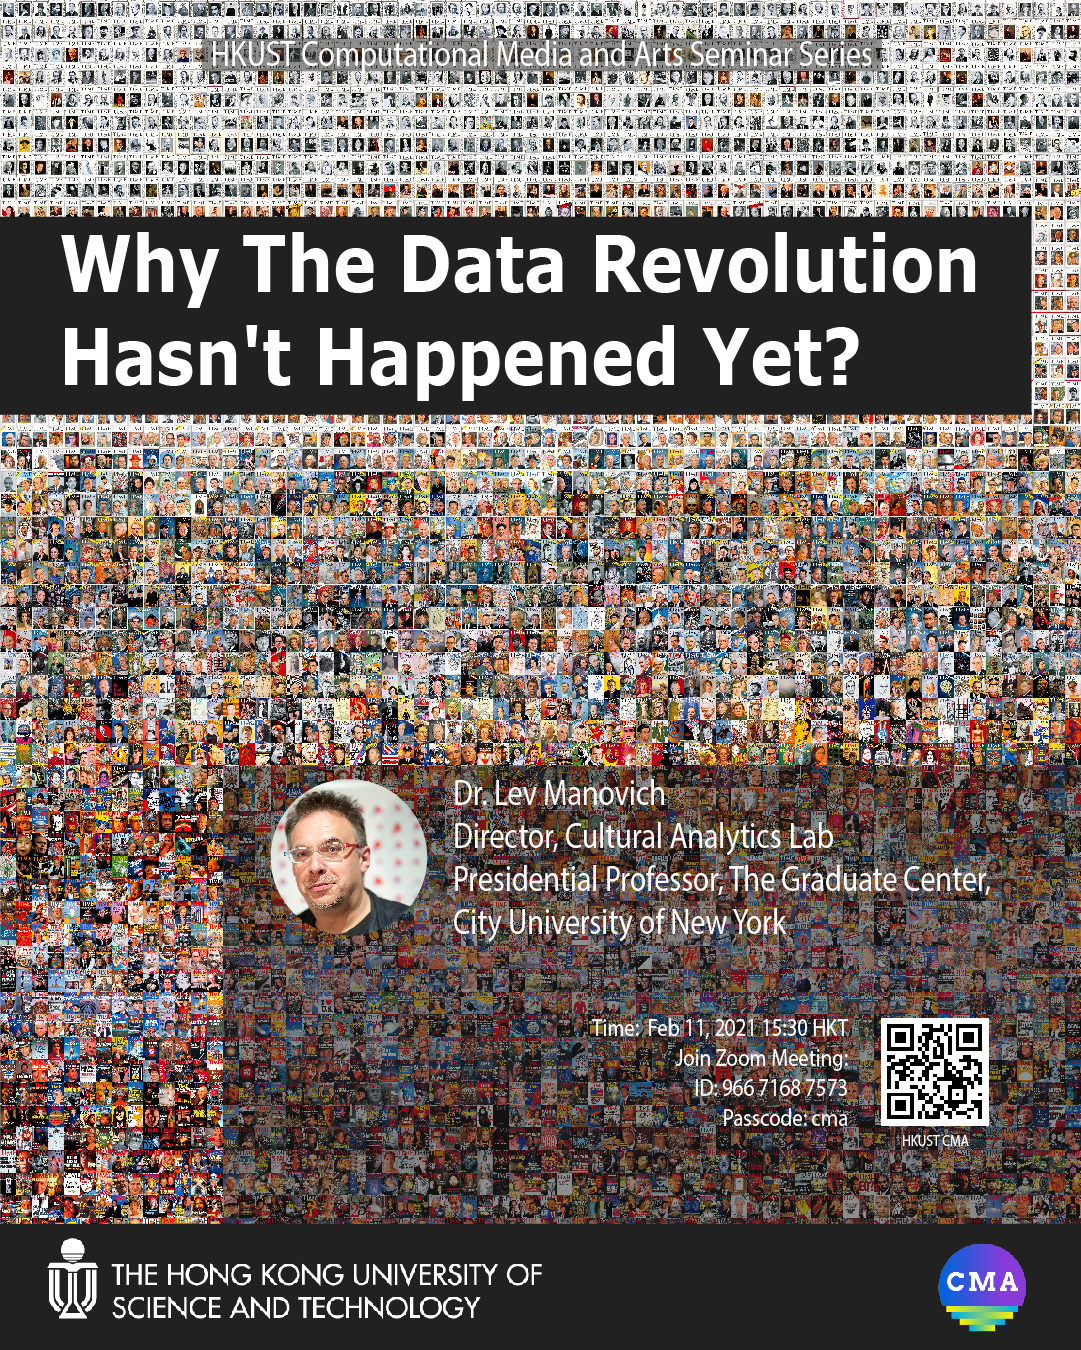 Why The Data Revolution Hasn't Happened Yet?